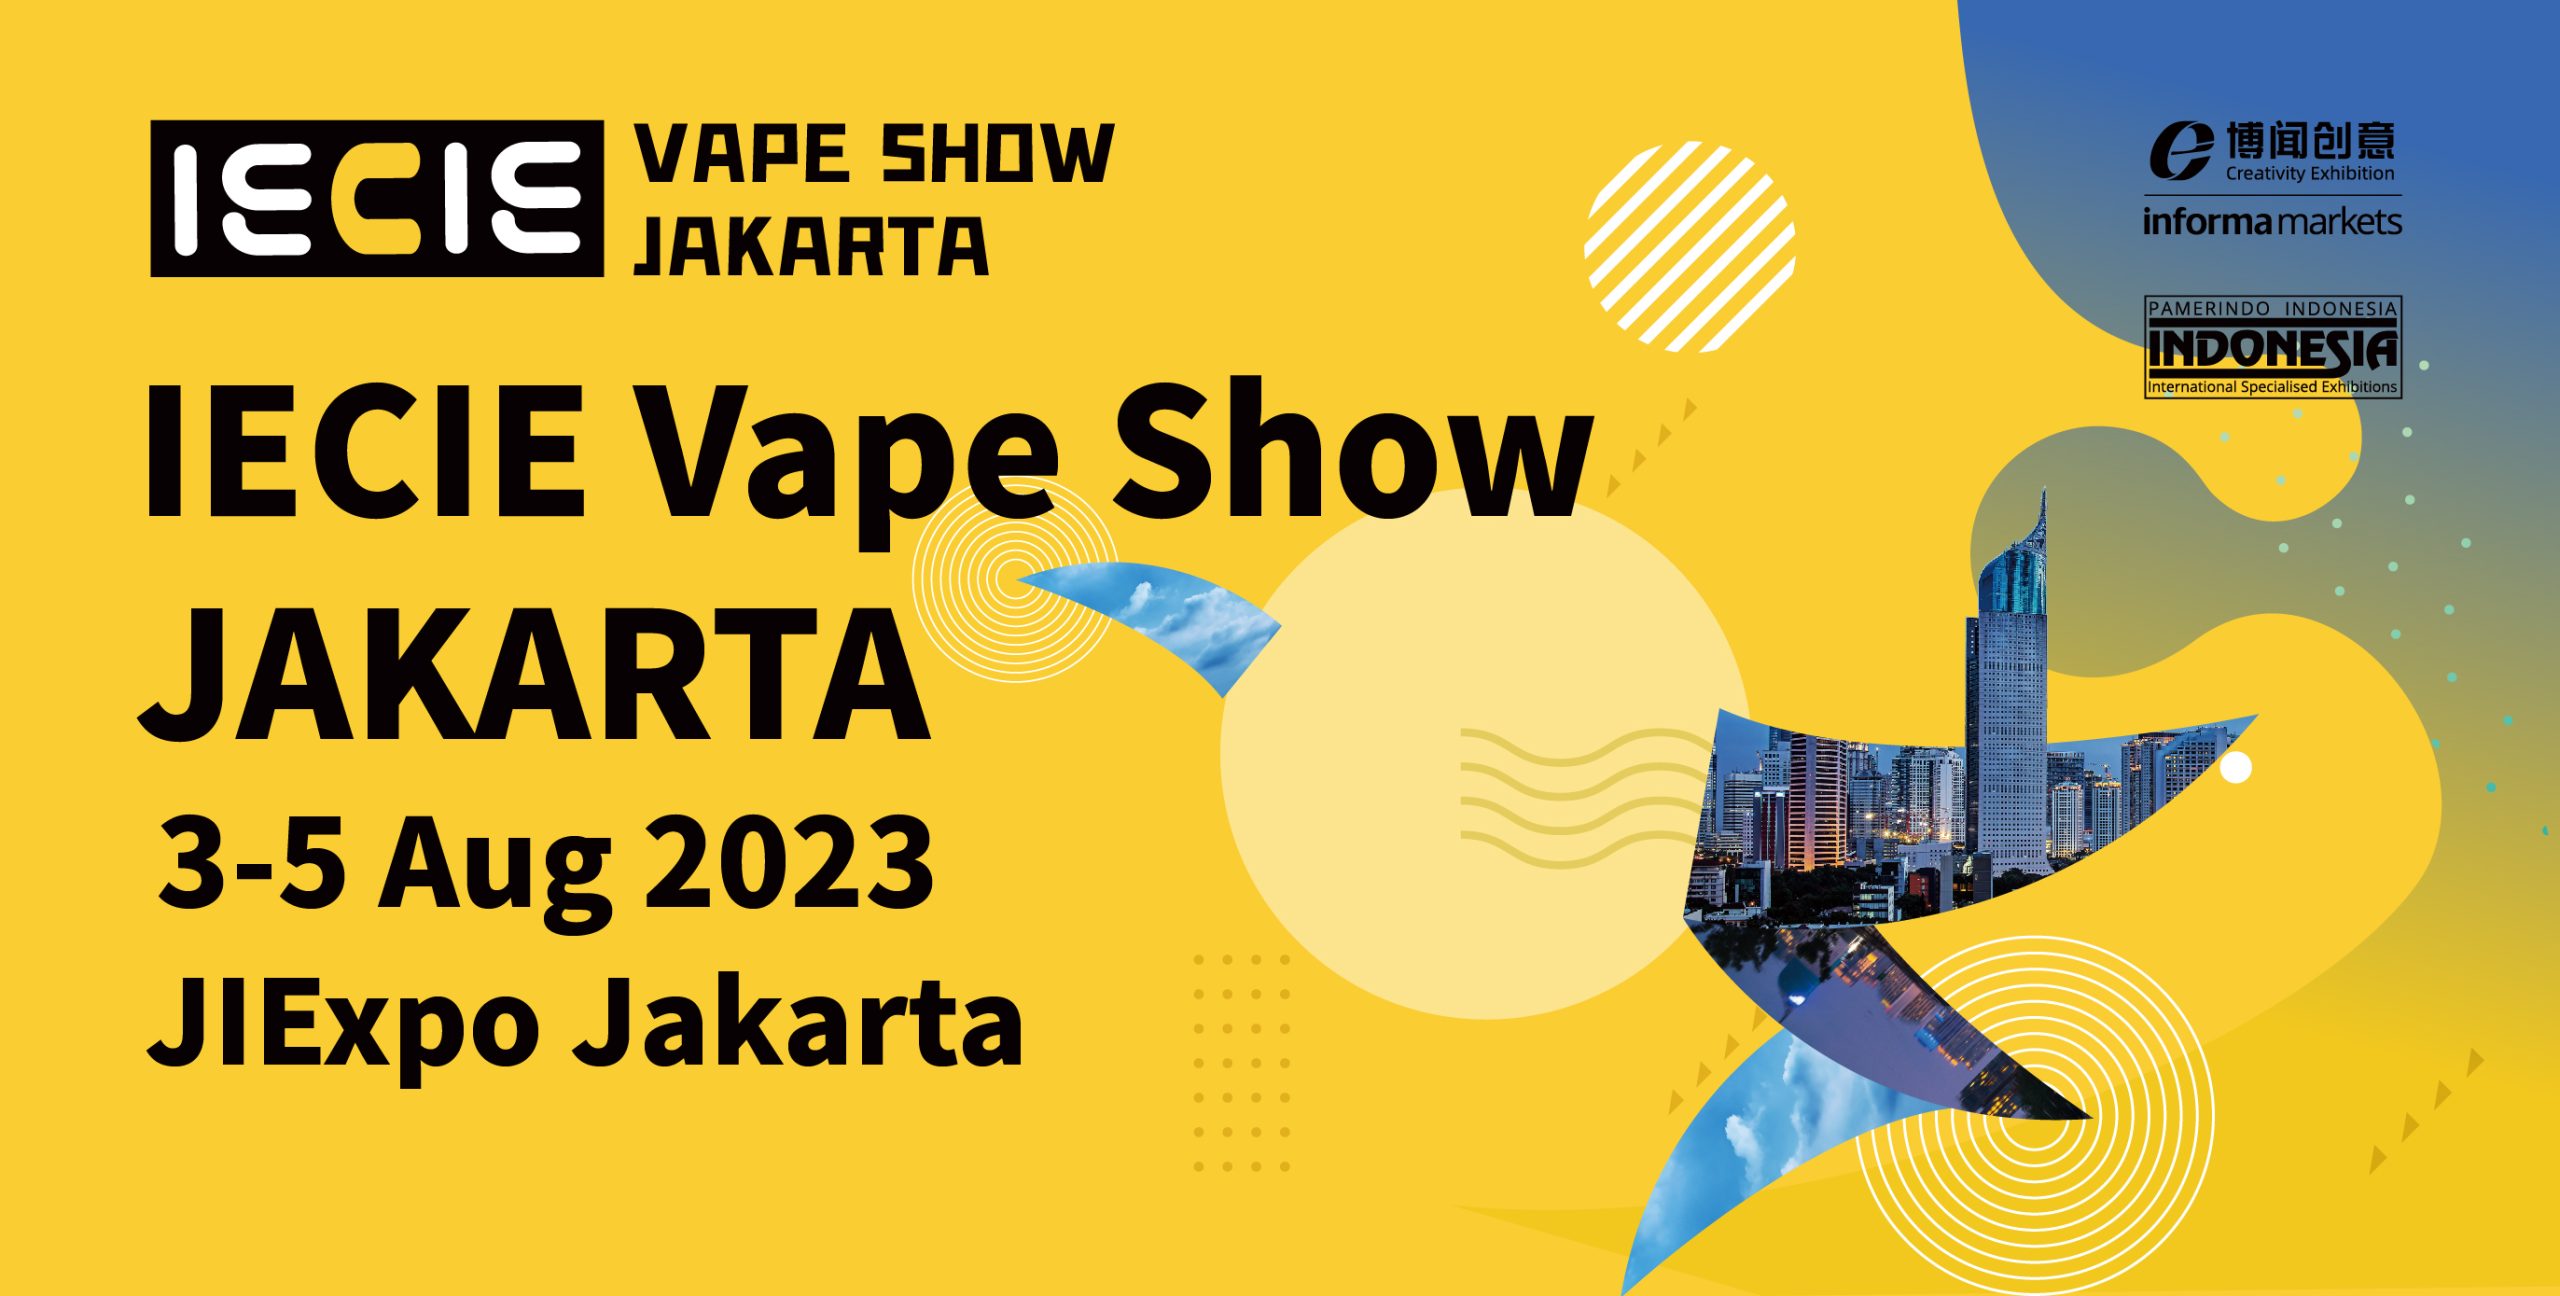 IECIE VAPE SHOW JAKARTA 2023 - JAKARTA ULUSLARARASI EXPO